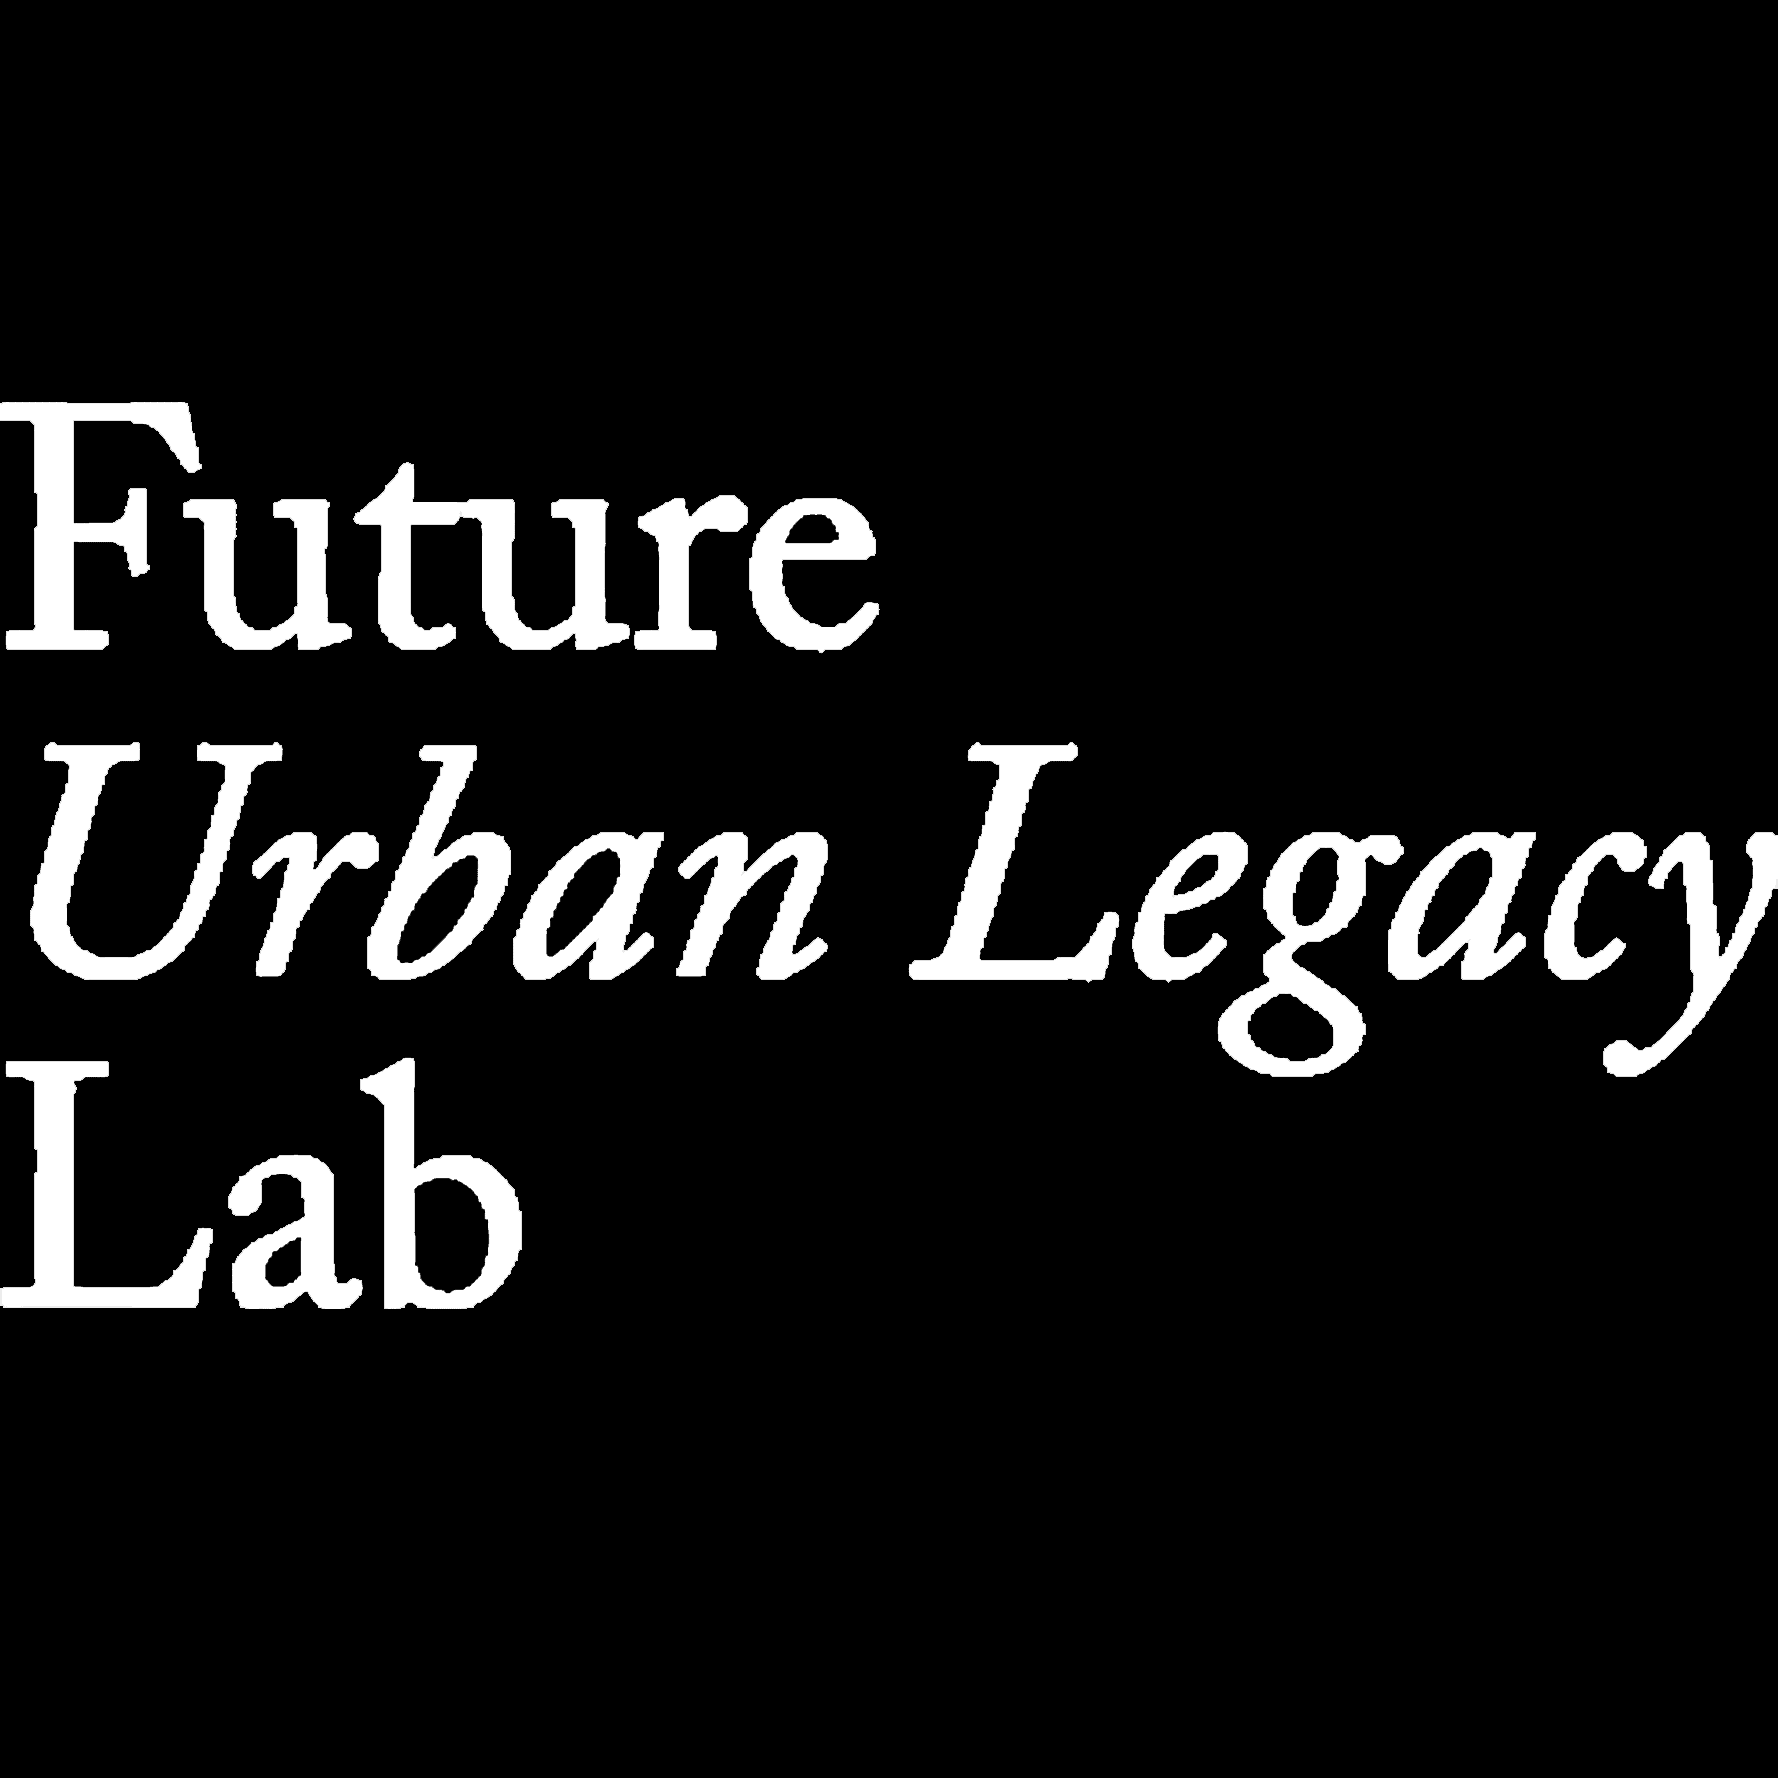 <span style="color: #23e286;">Future Urban Legacy Lab</span>